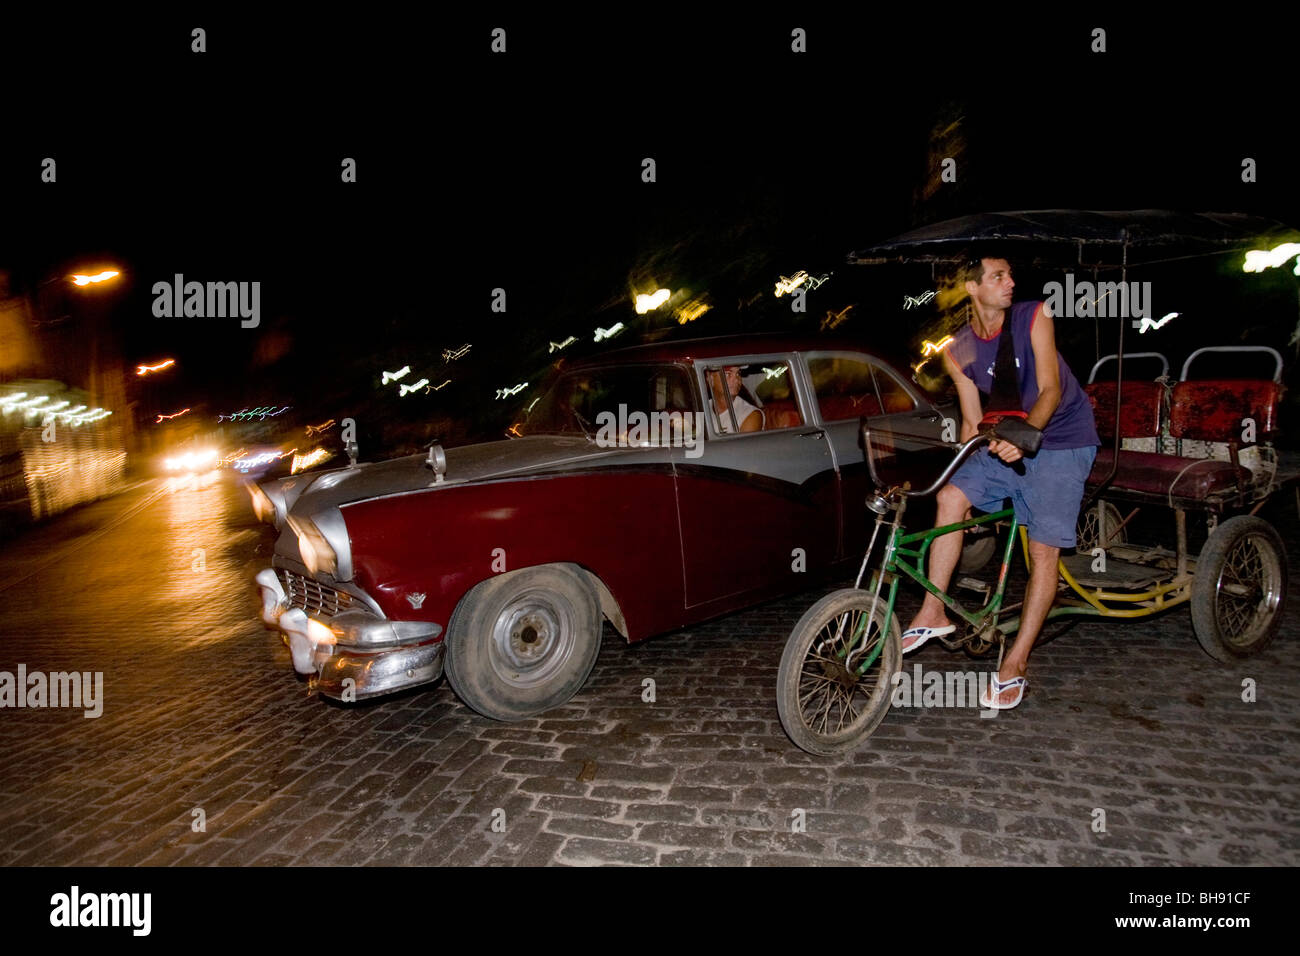 Street Scene of Nightlife, Camagueey, Caribbean Sea, Cuba Stock Photo